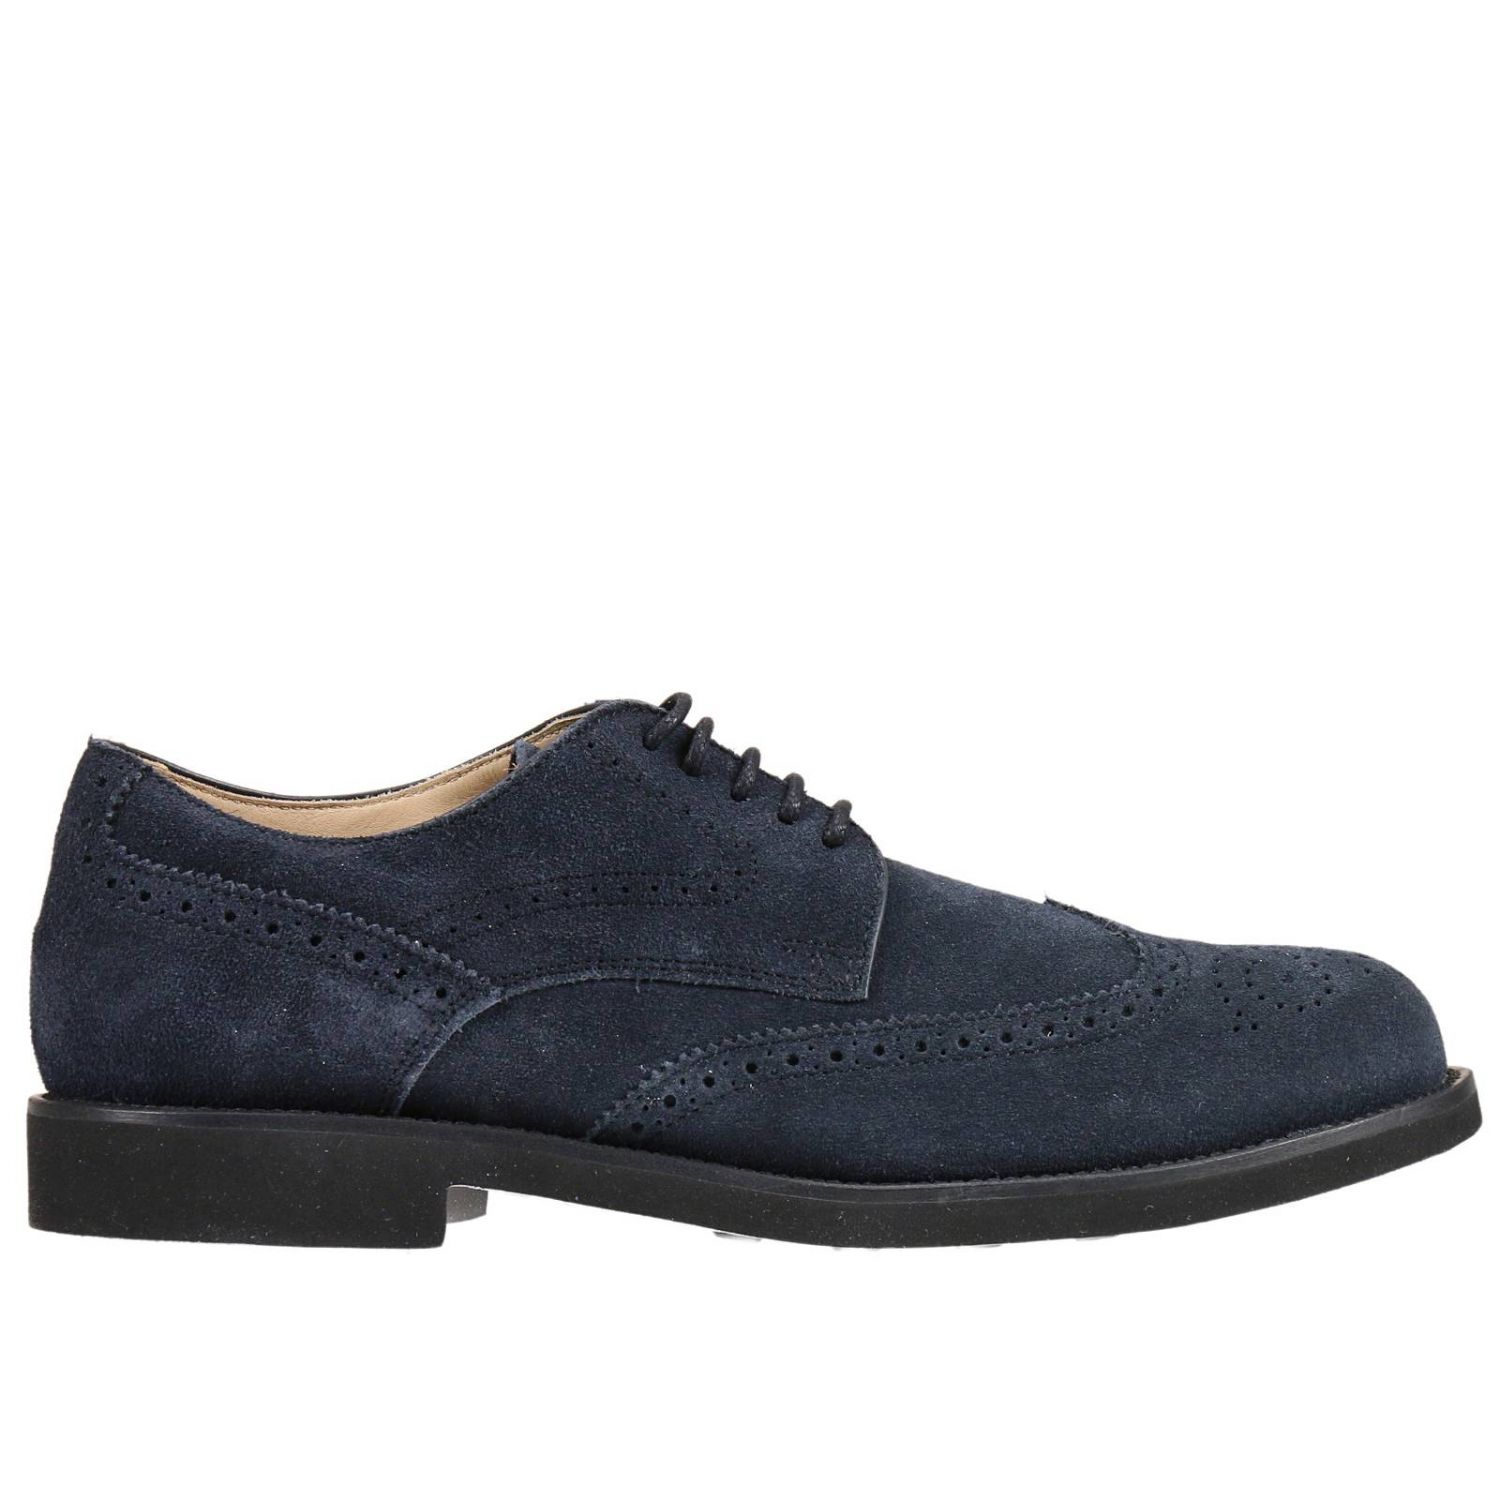 Shoes men Tod's | Brogue Shoes Tods Men Blue | Brogue Shoes Tods ...